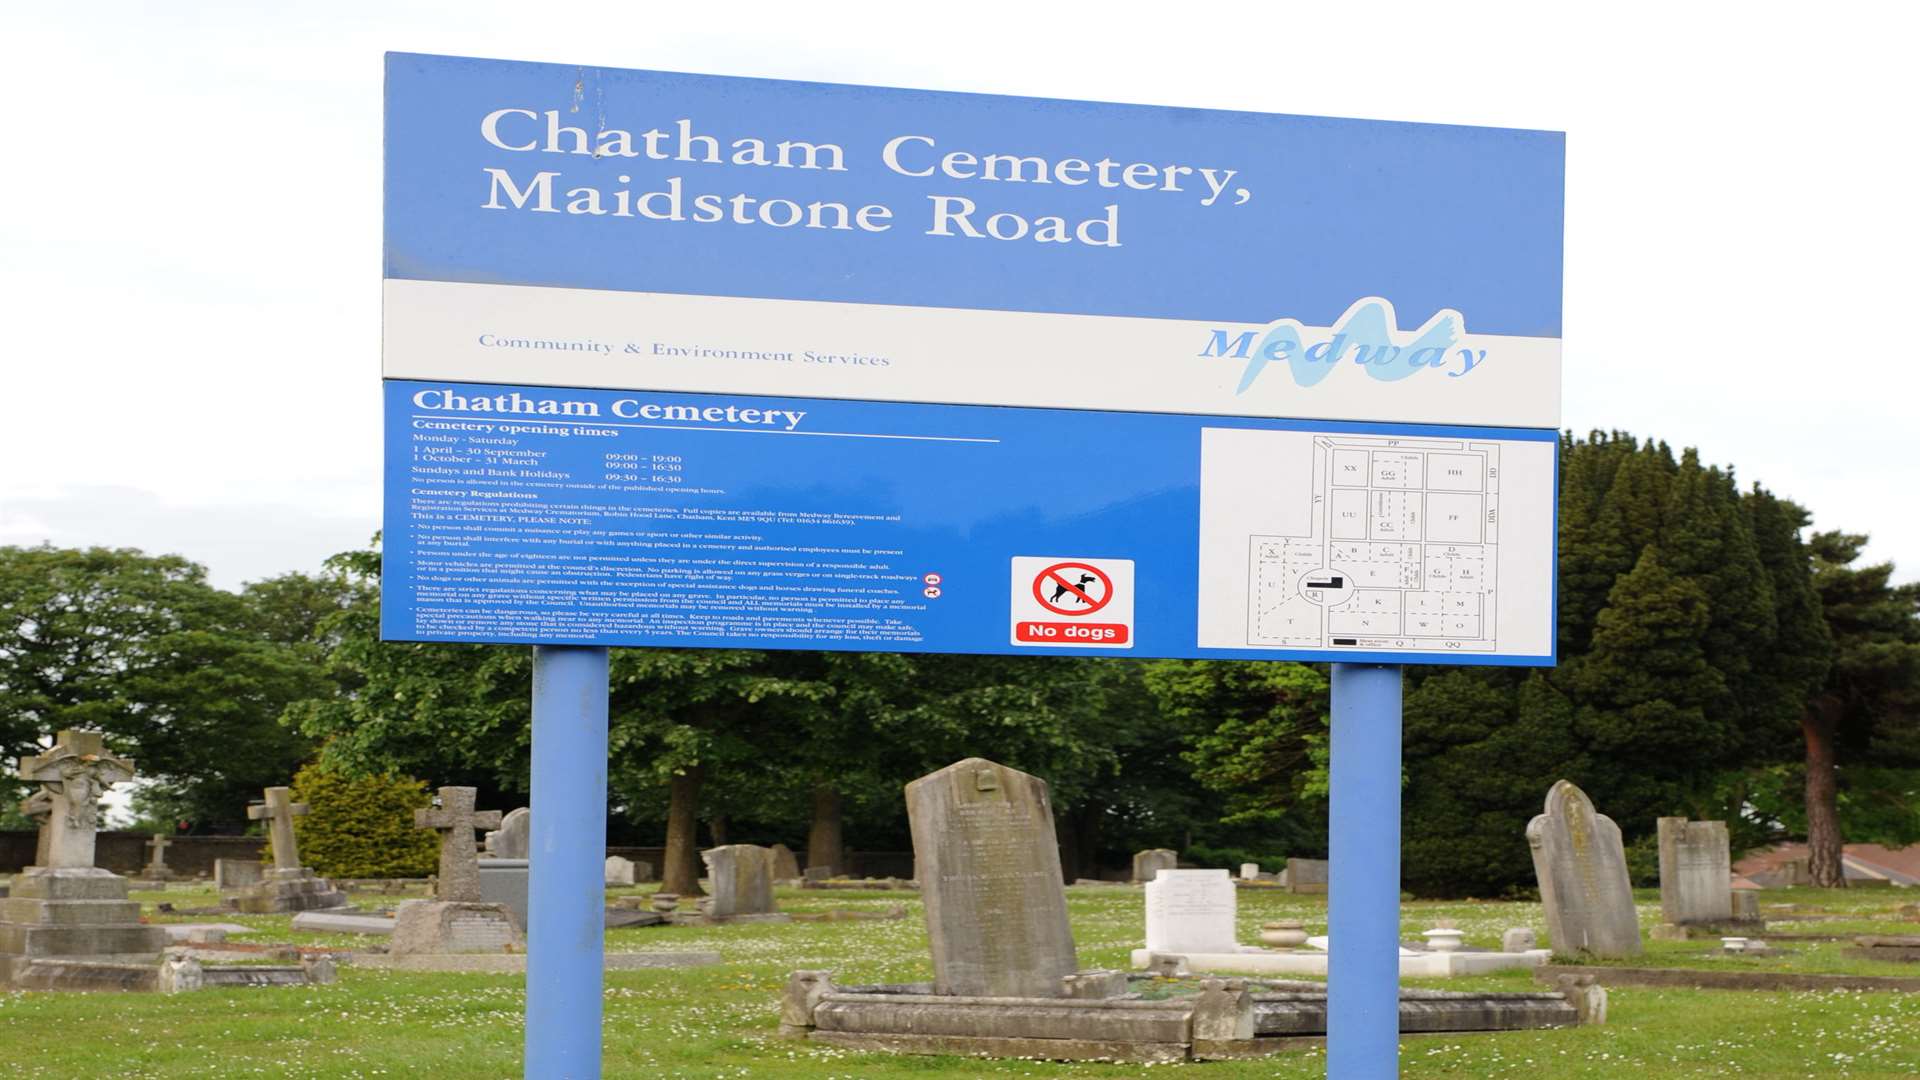 Chatham Cemetery, Maidstone Road, Chatham